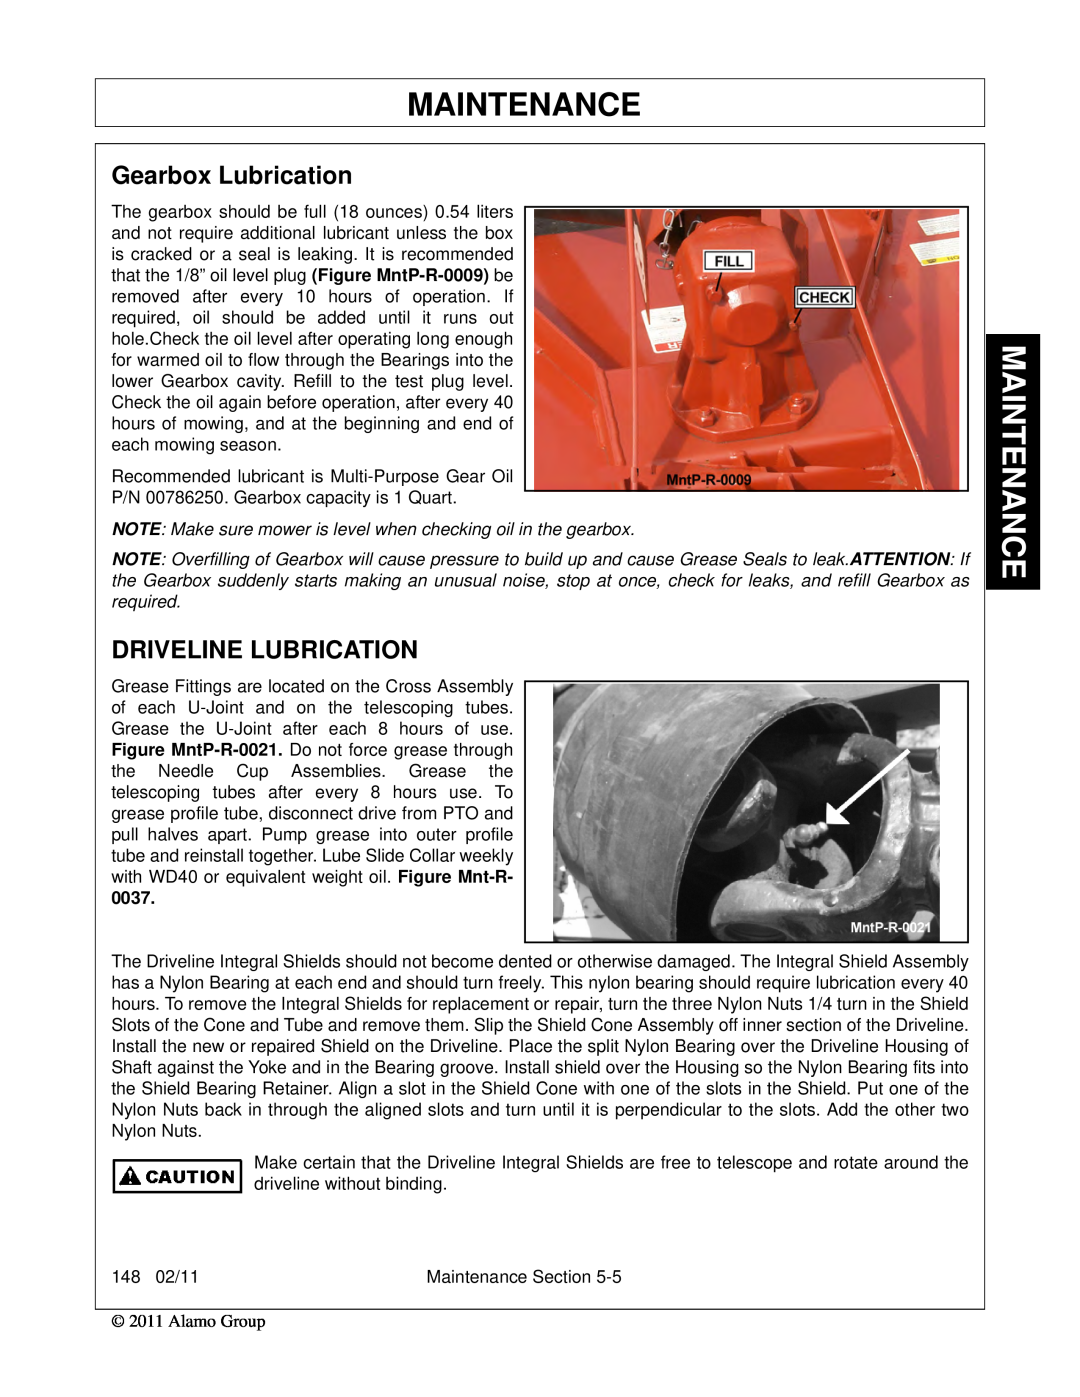 Rhino Mounts 148 manual Gearbox Lubrication, Driveline Lubrication, Maintenance 